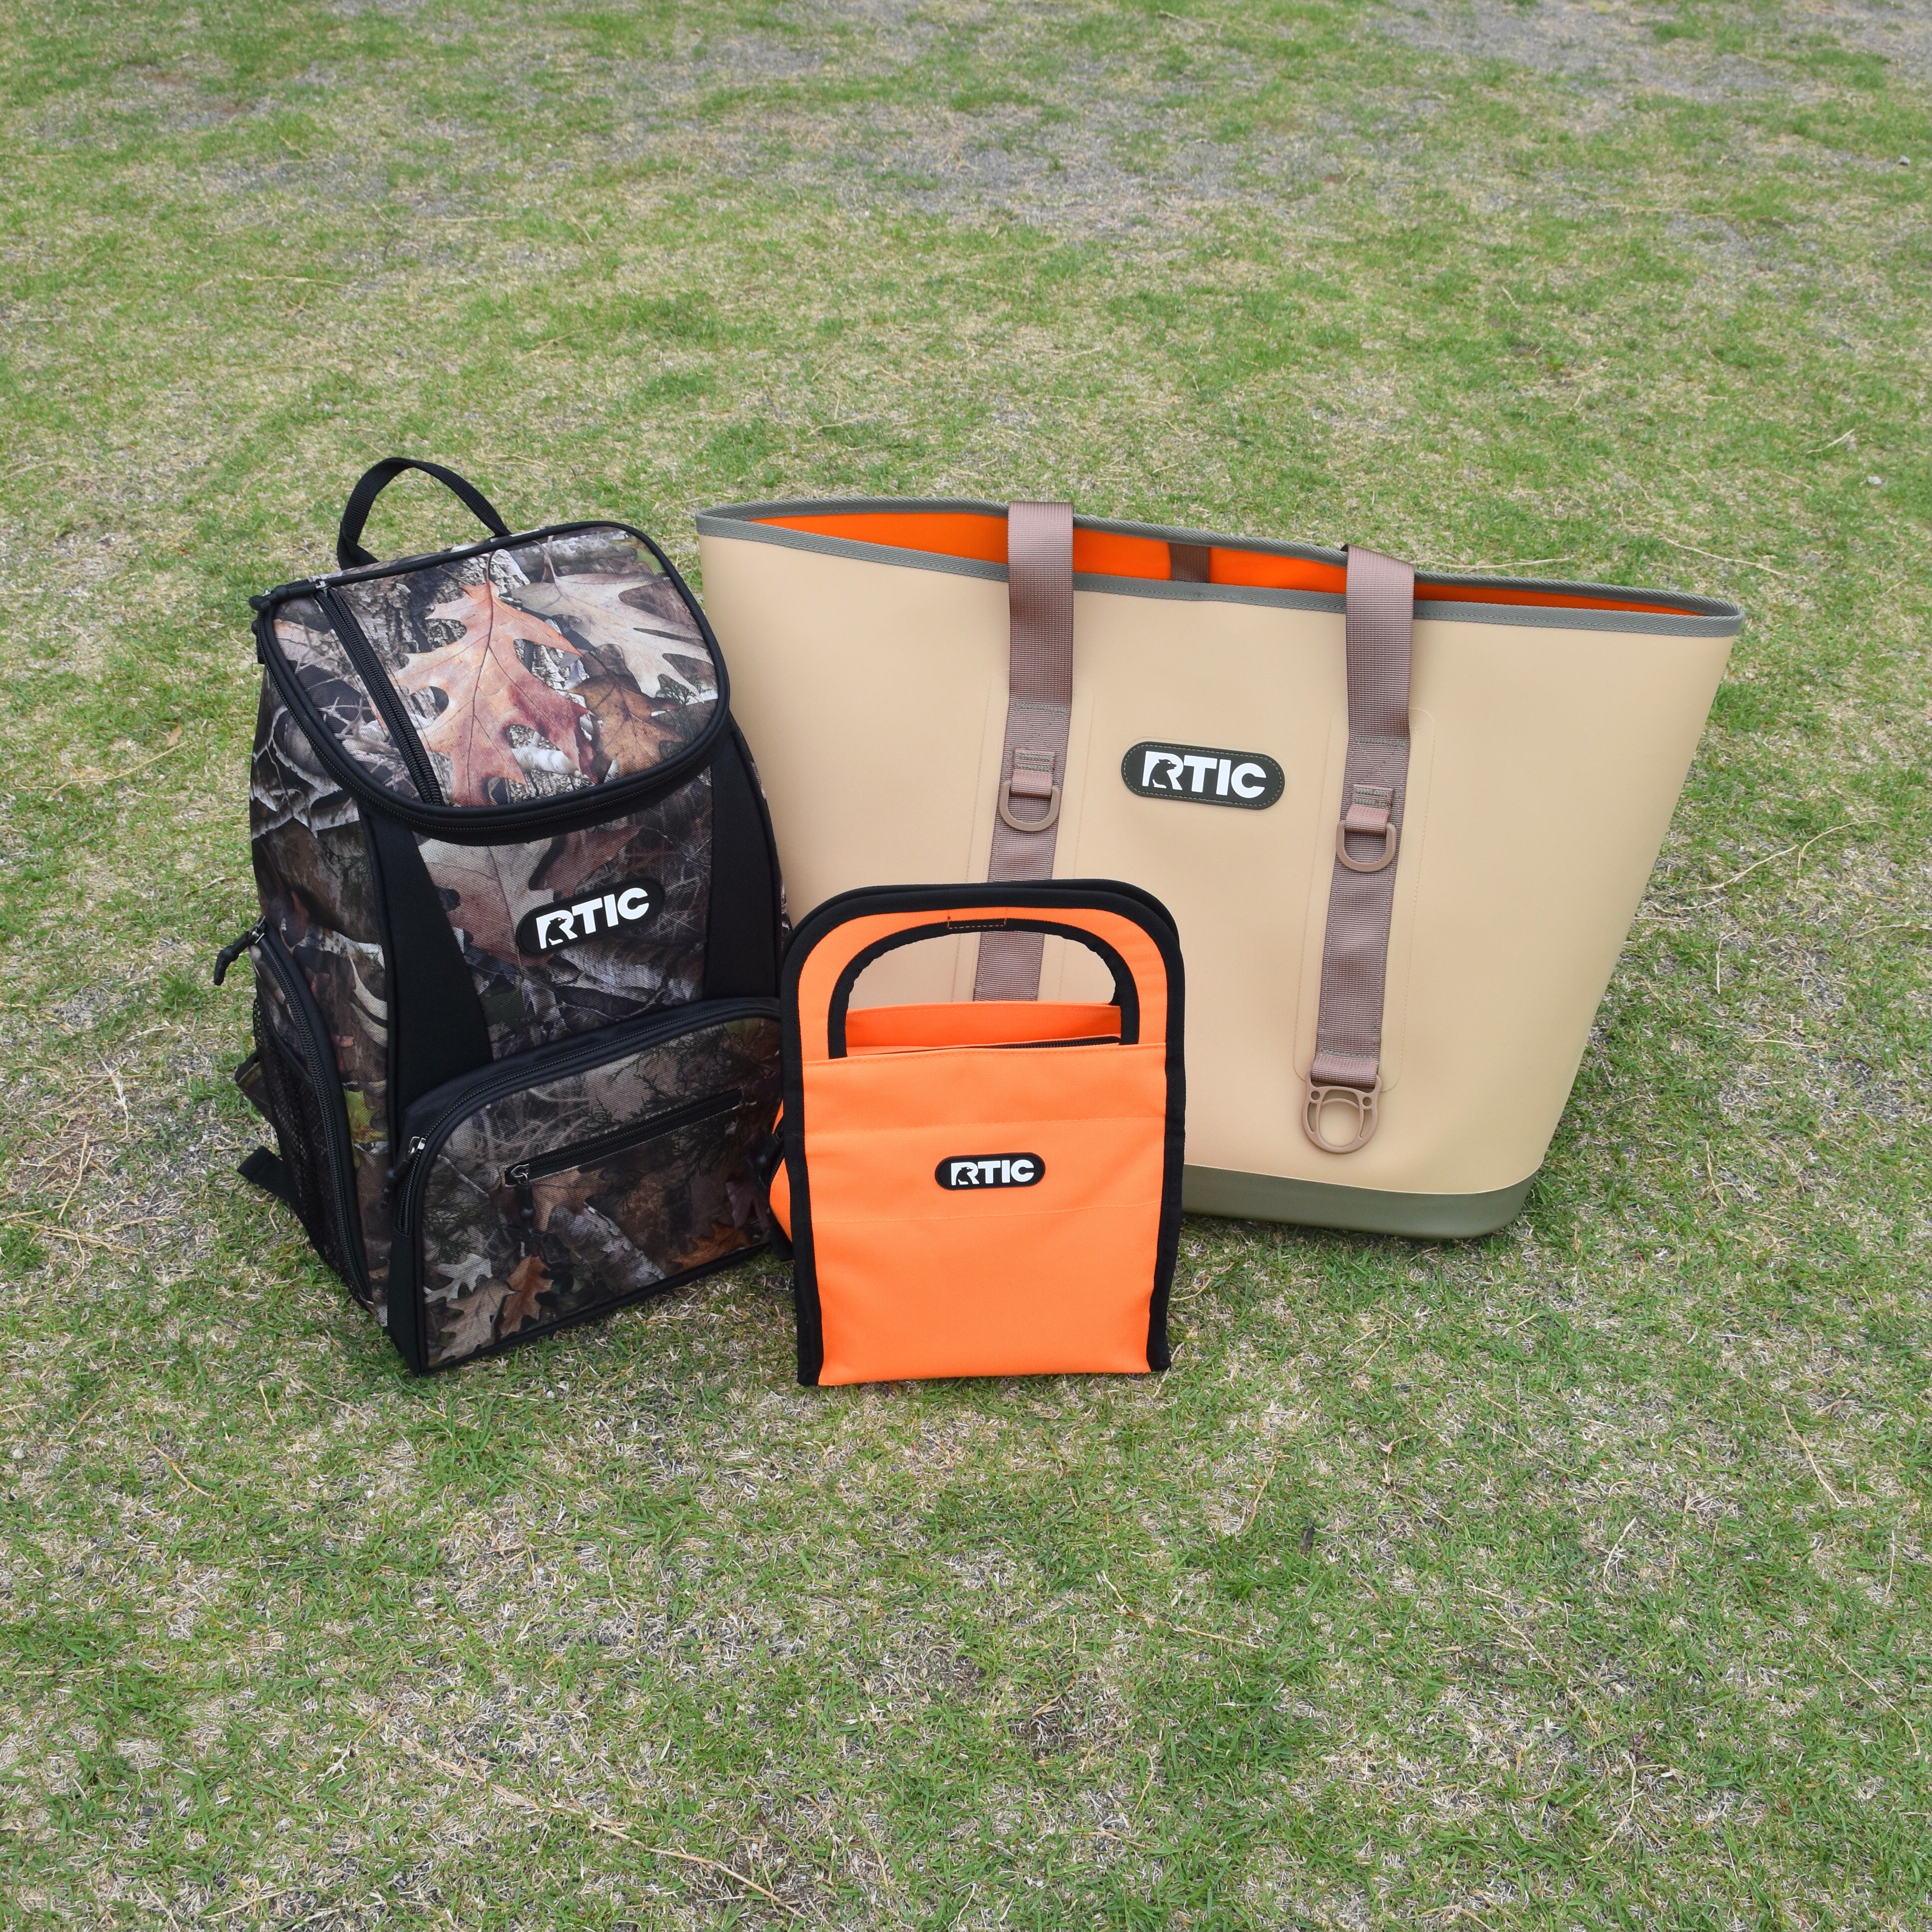 Rtic クーラー ランチバッグ Handle Top Lunch Bag Orange MOTTAGE  アートな車中泊グッズ、カーキャンプ用品の専門店